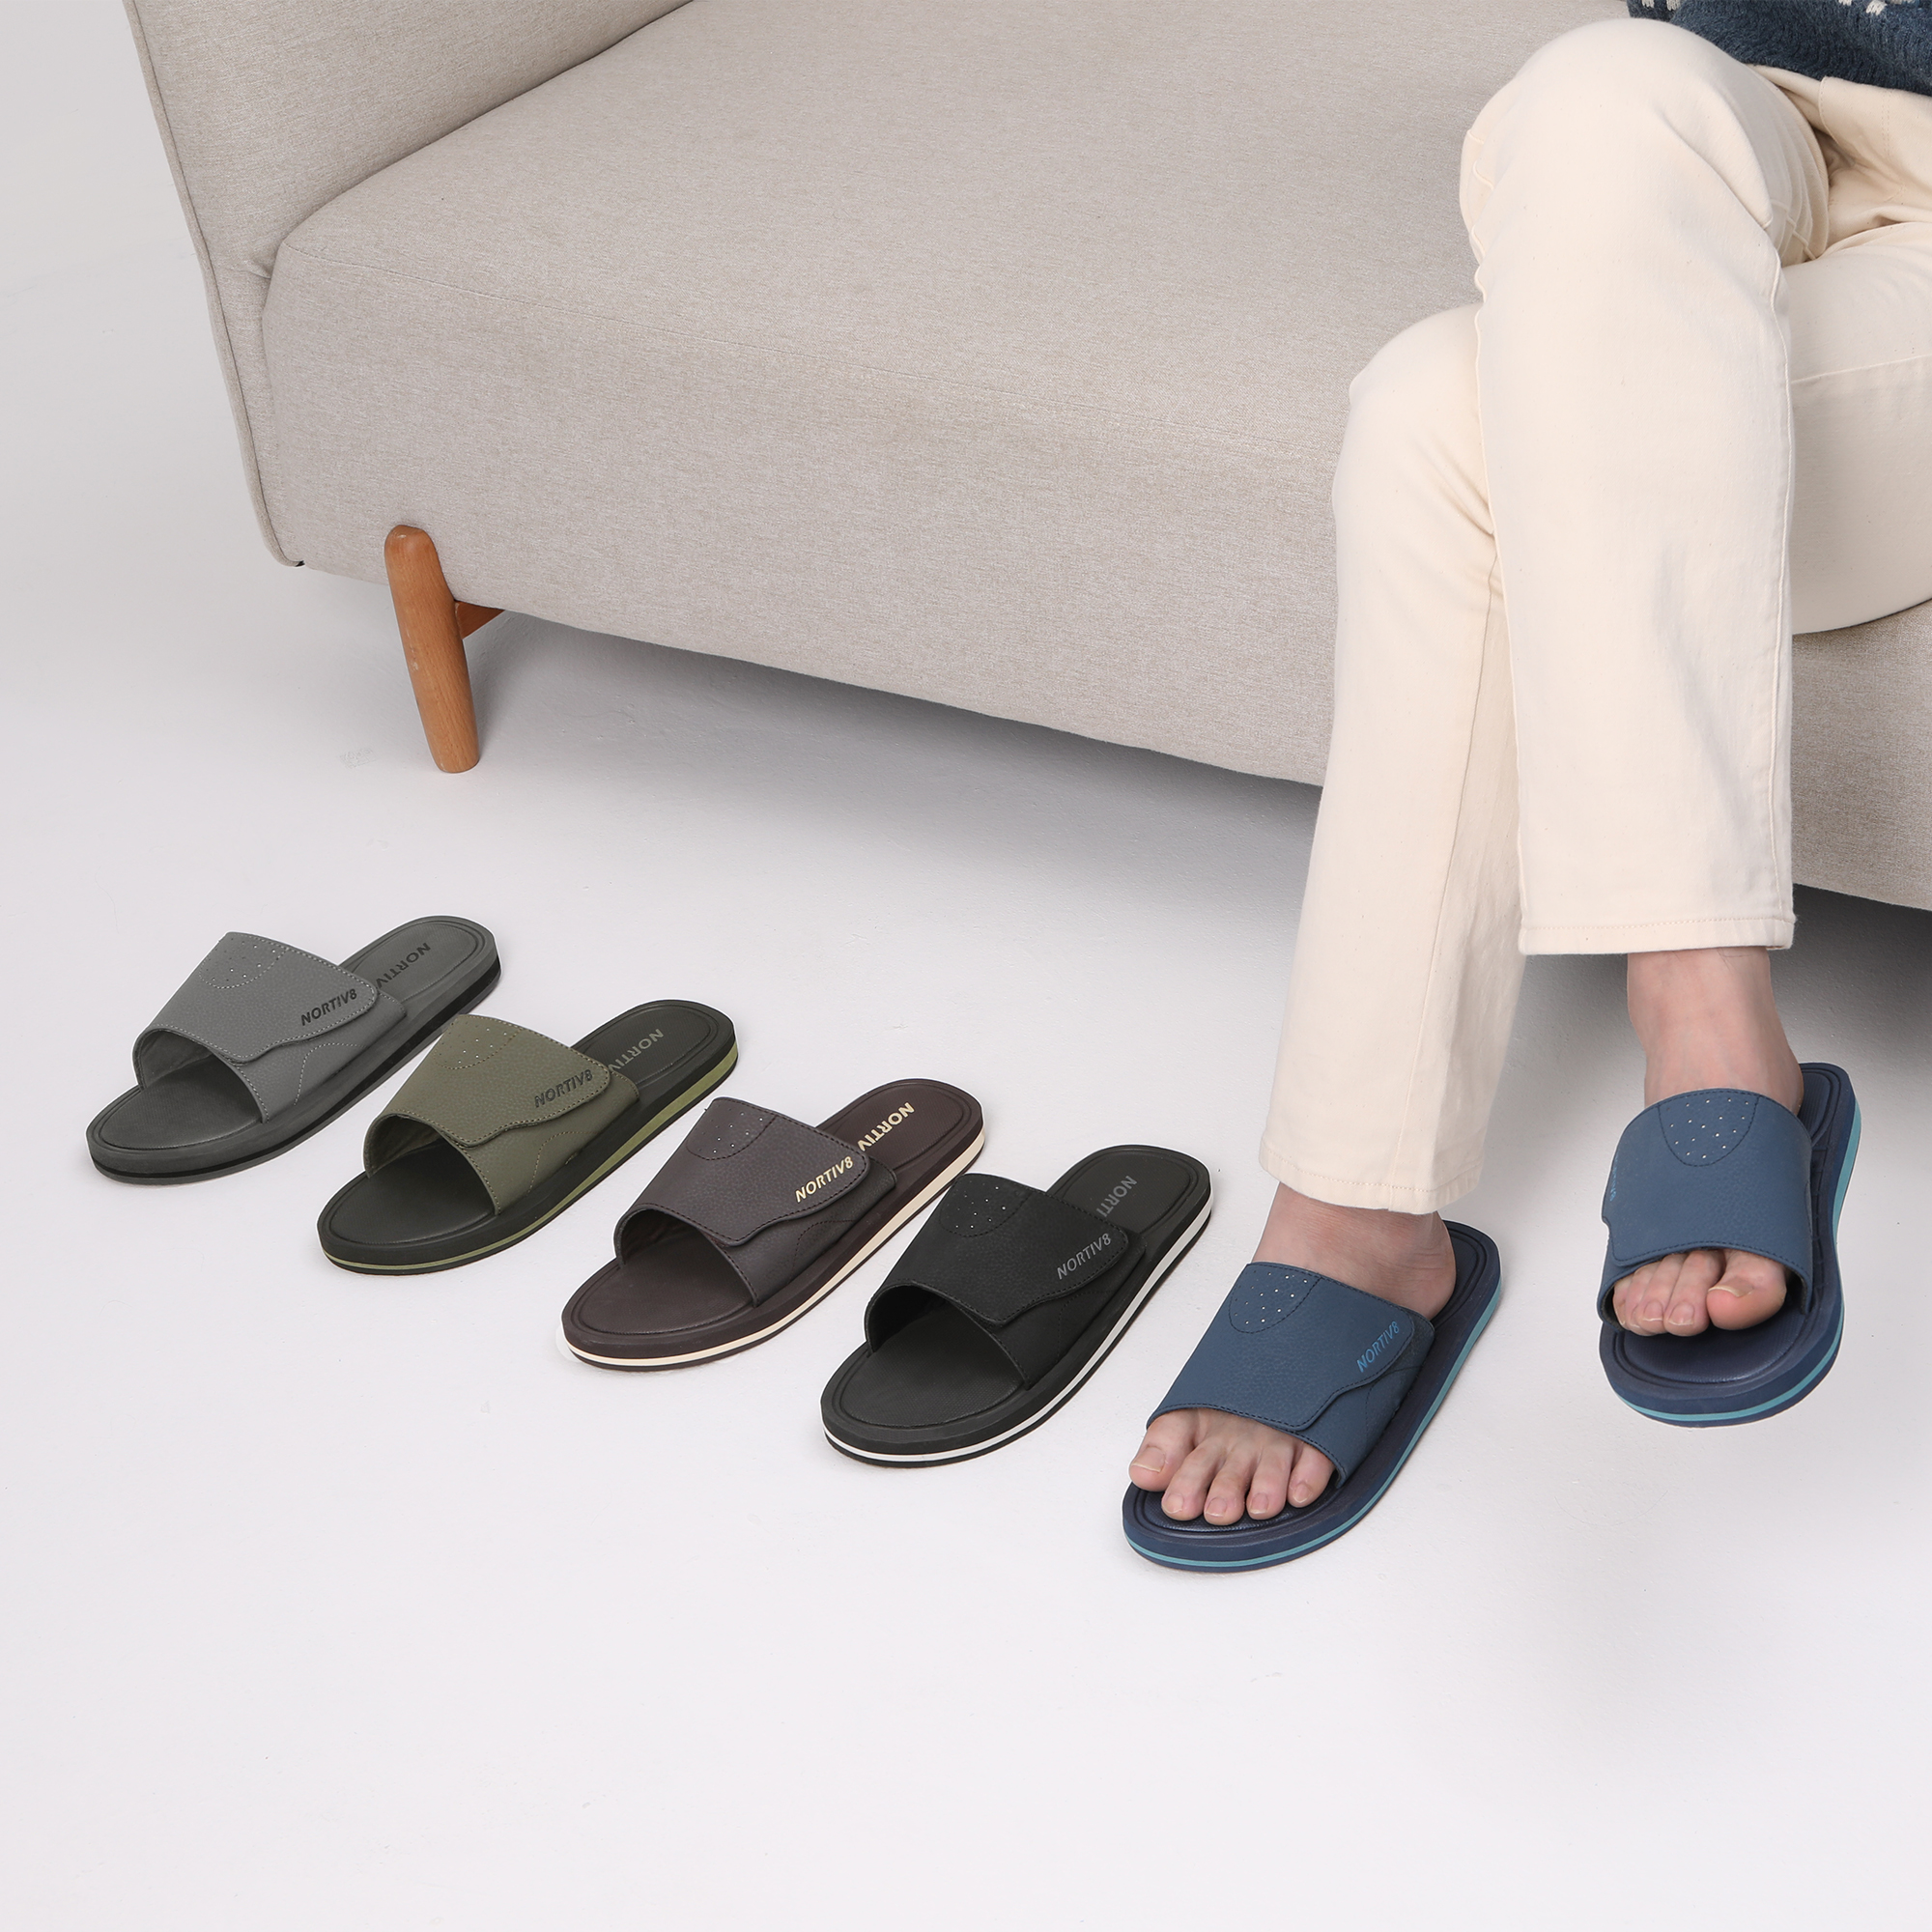 Nortiv8 Men's Memory Foam Adjustable Slide Sandals Comfort Lightweight Summer Beach Sandals Shoes FUSION OLIVE/GREEN Size 13 - image 4 of 5